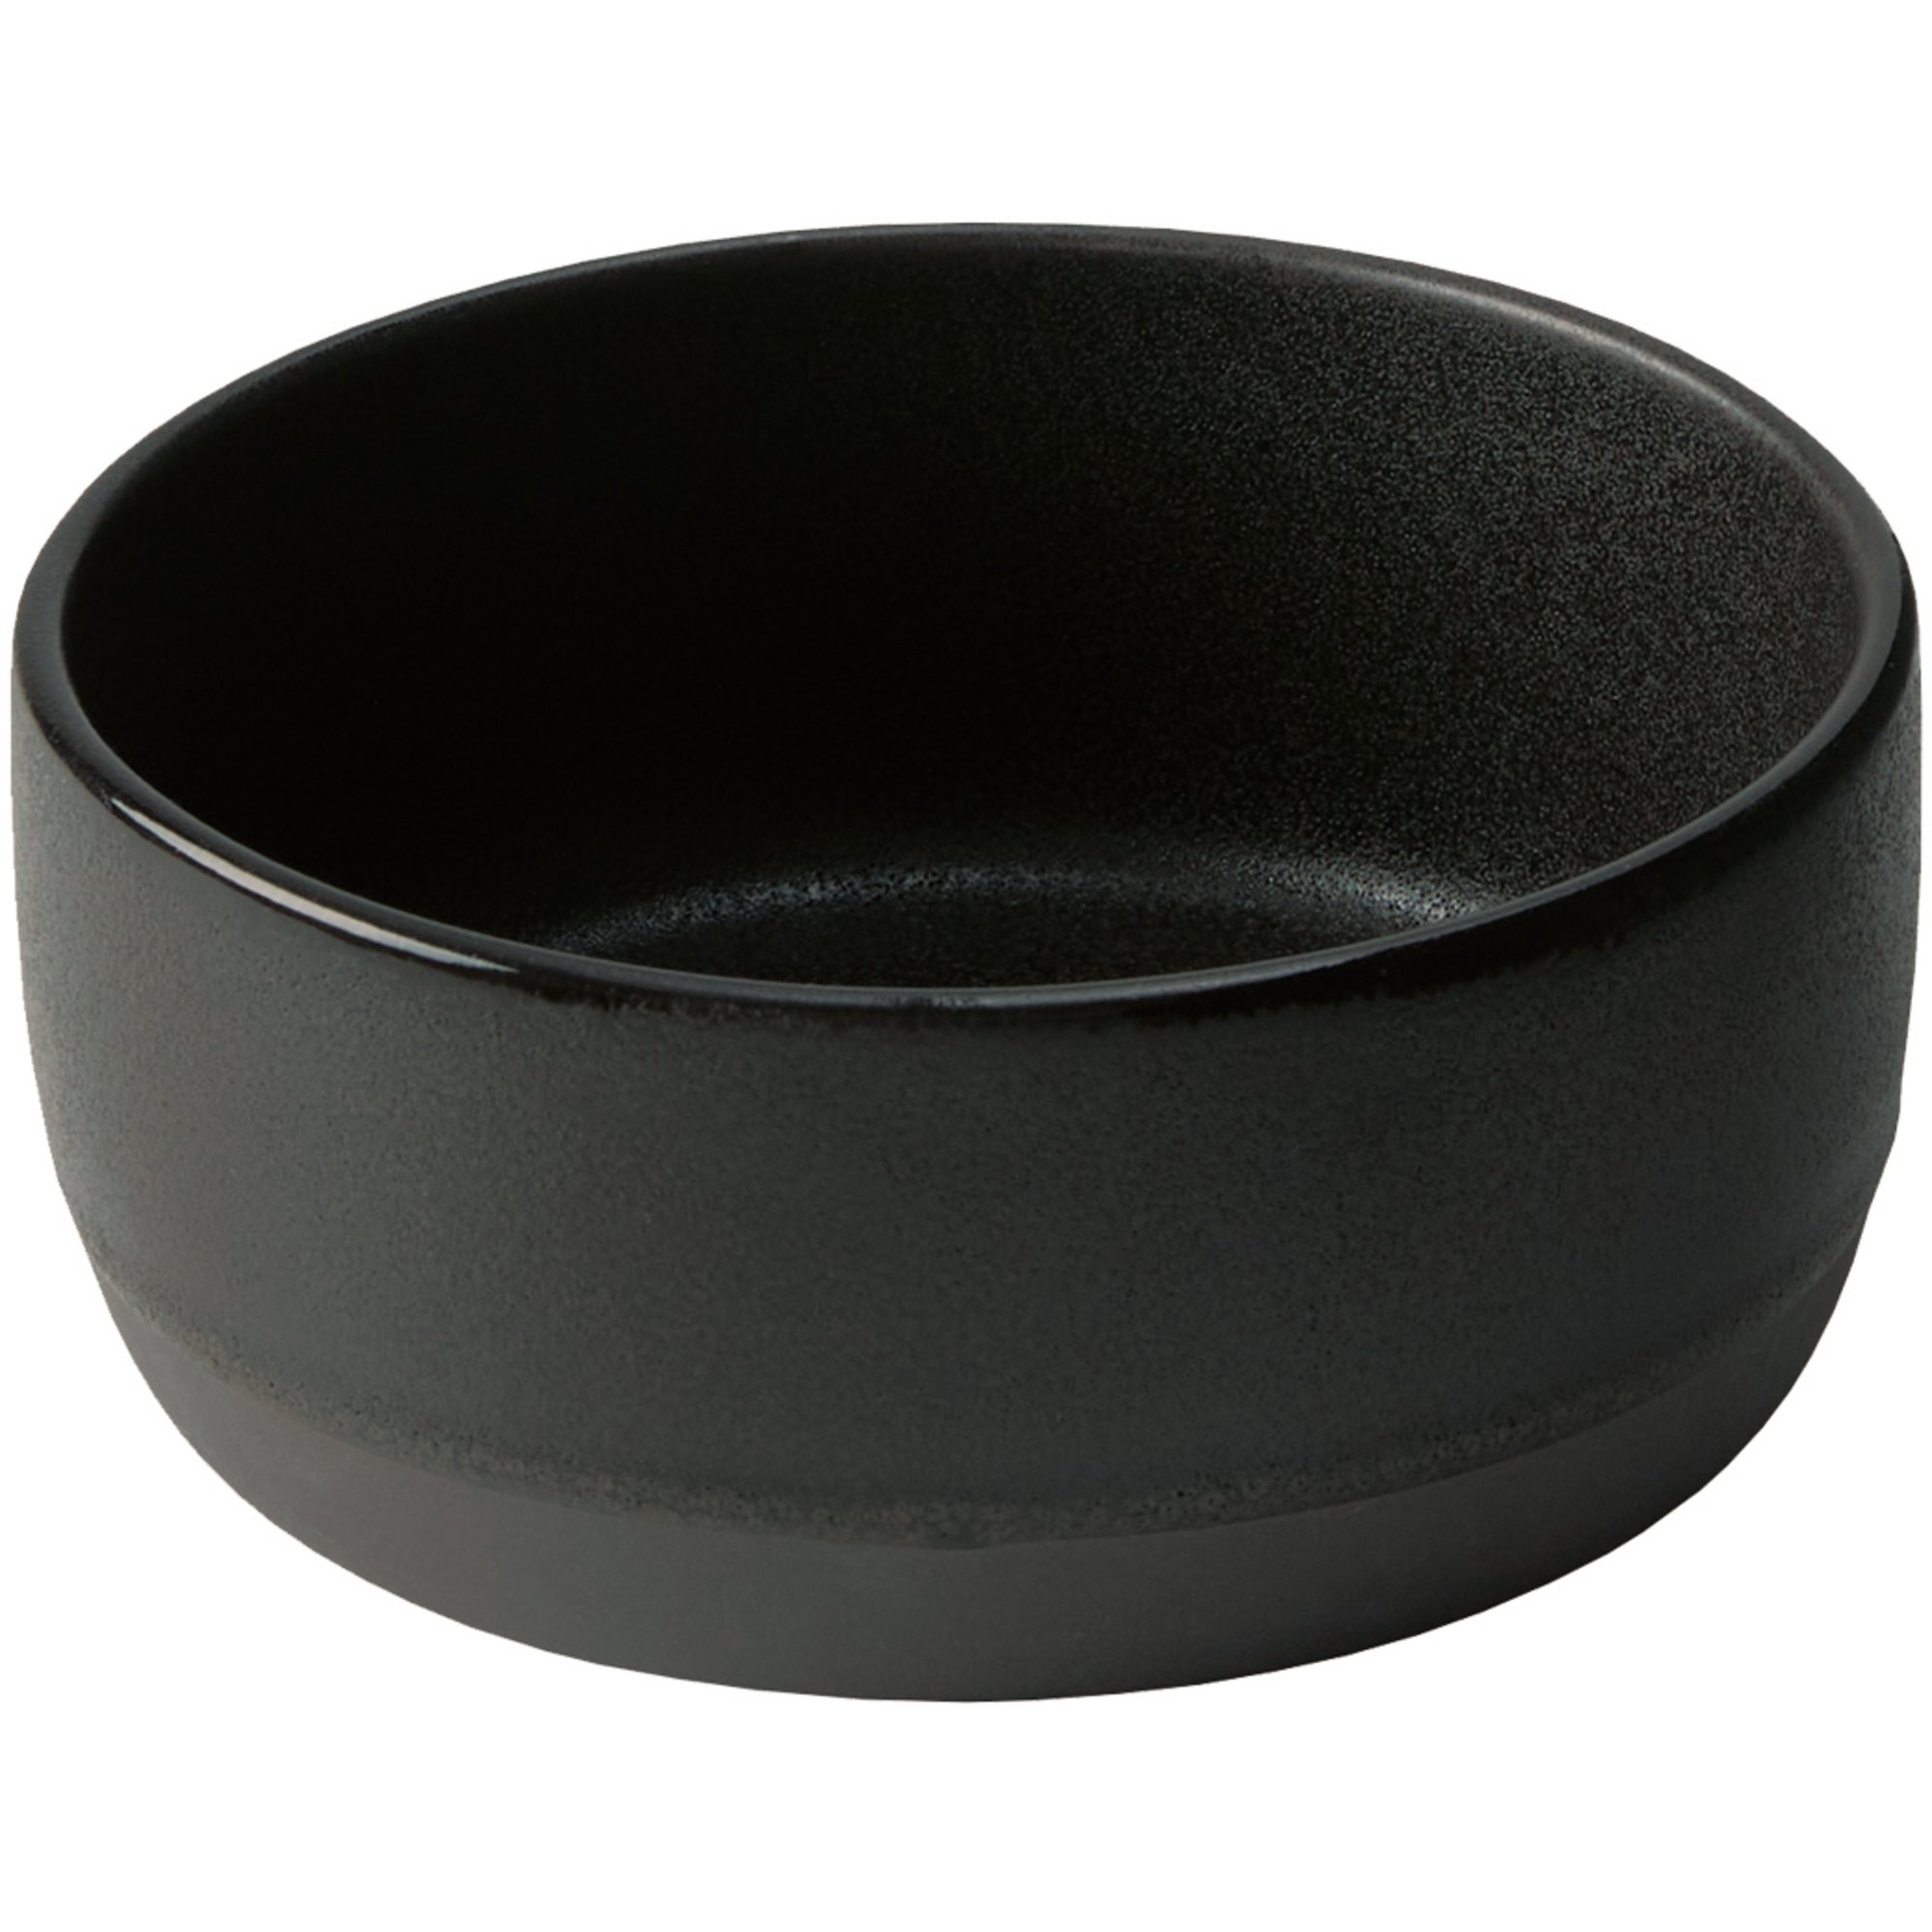 Aida RAW skål, 13,5 cm, titanium black